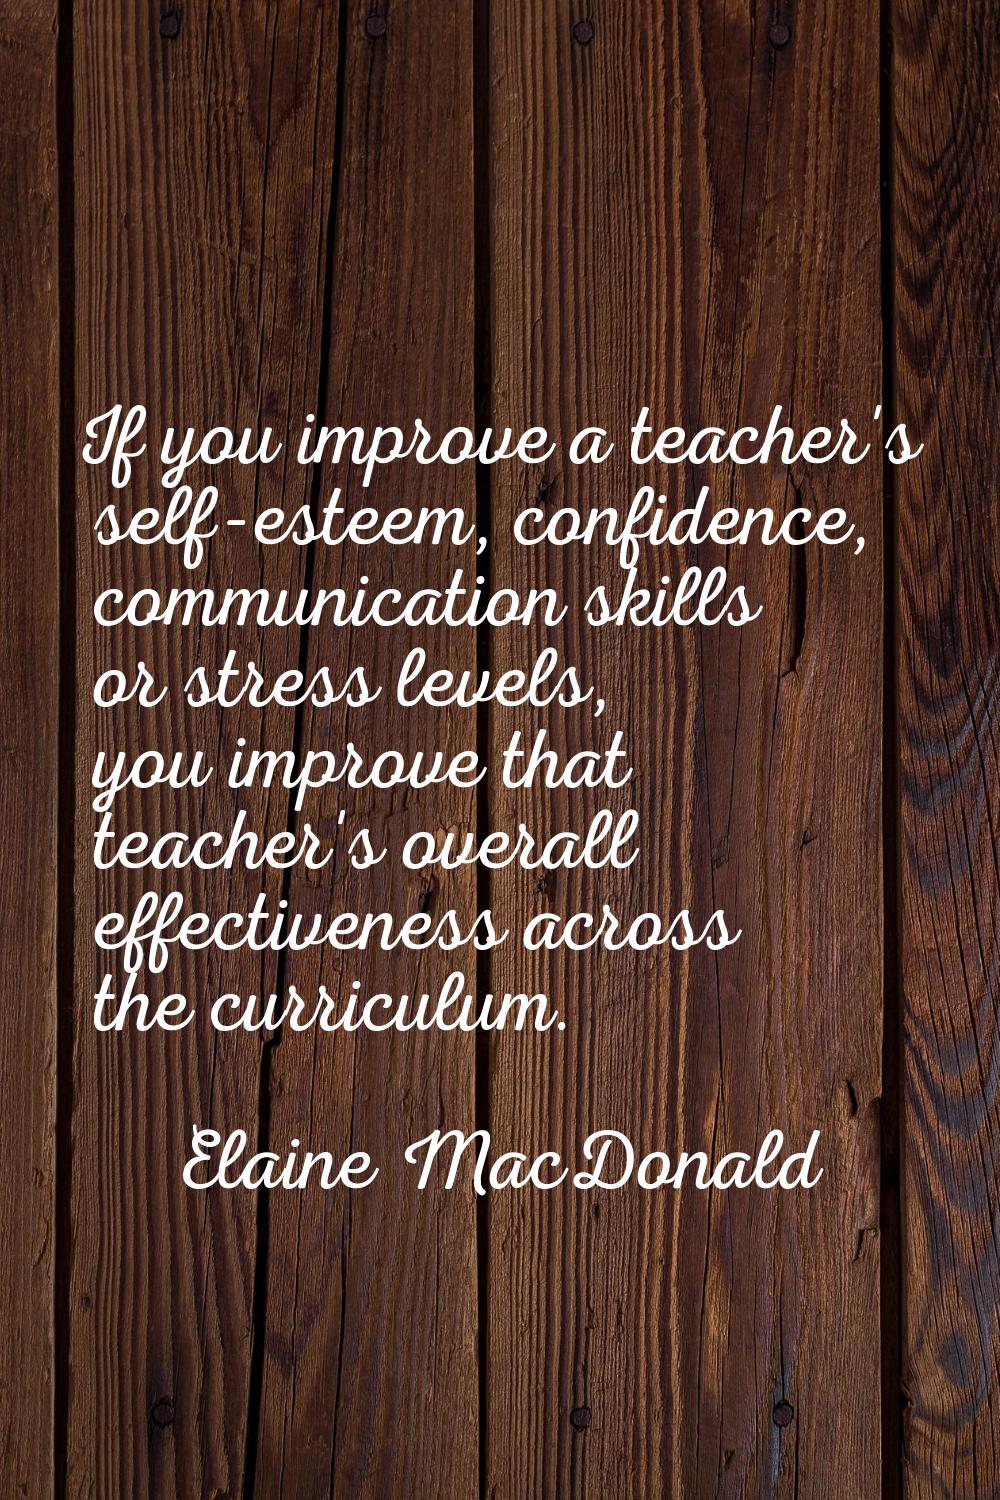 If you improve a teacher's self-esteem, confidence, communication skills or stress levels, you impr